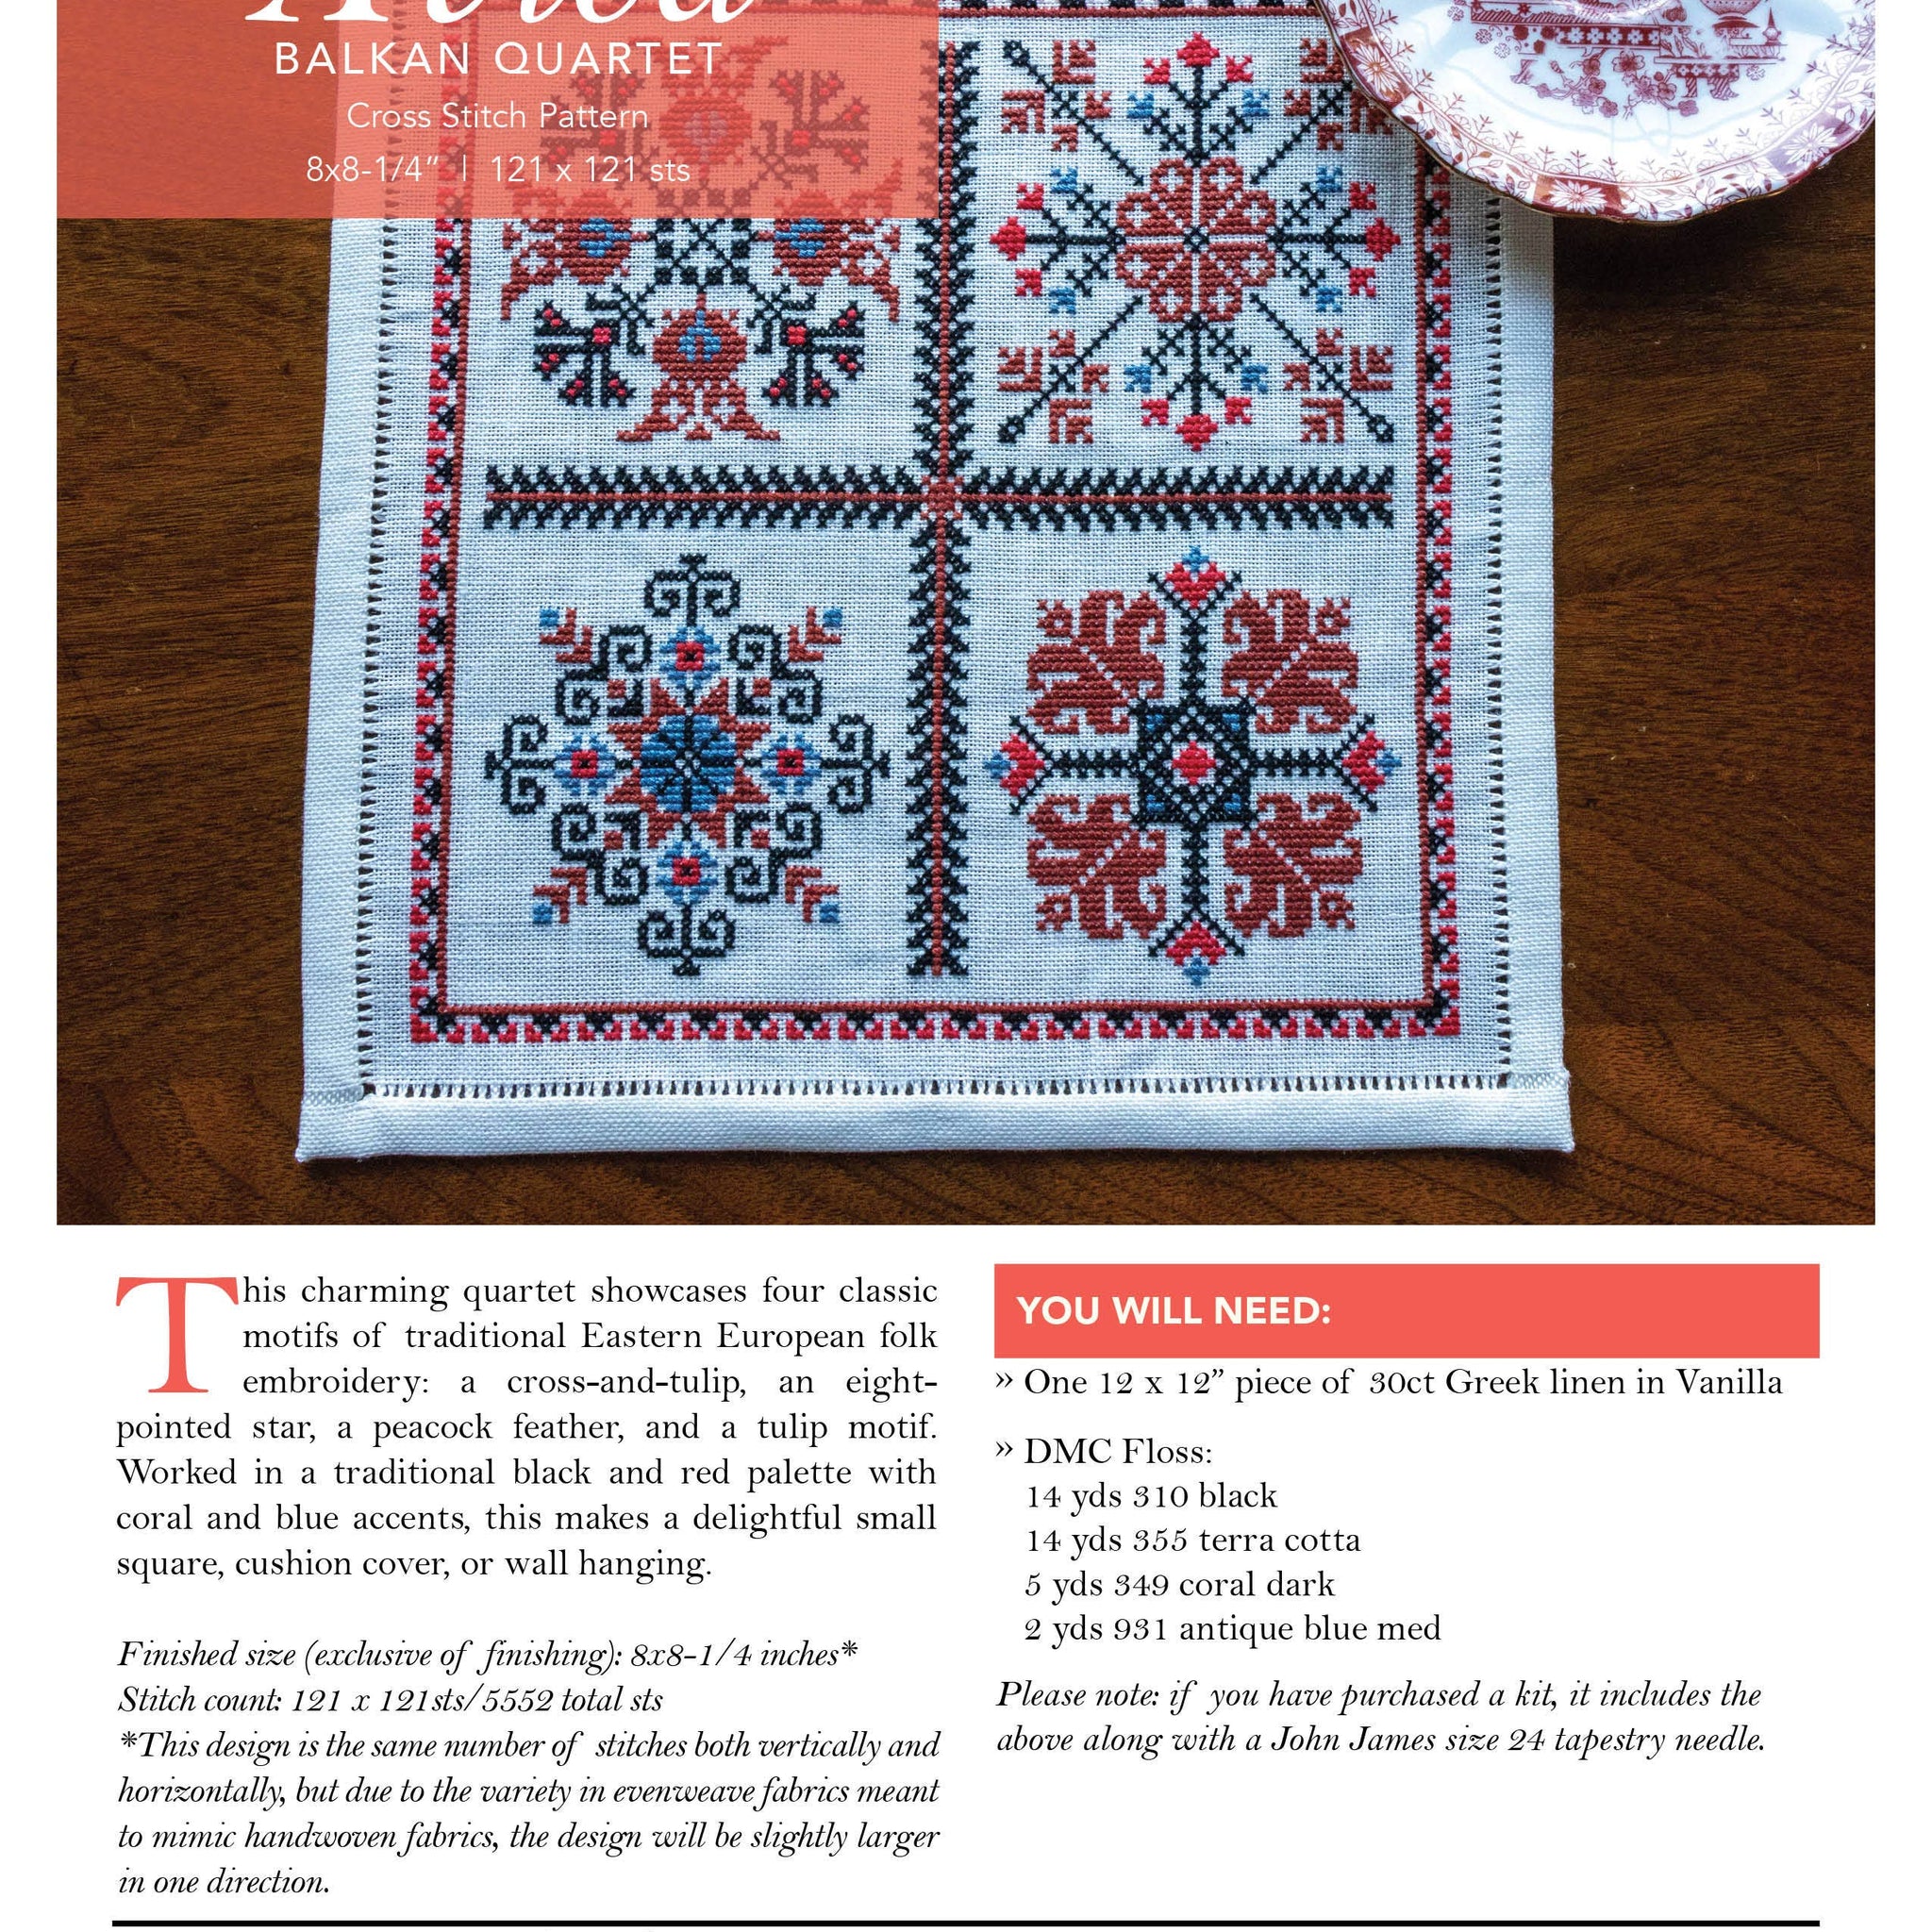 Balkan Quartet - Avlea Folk Embroidery - Cross Stitch Kit